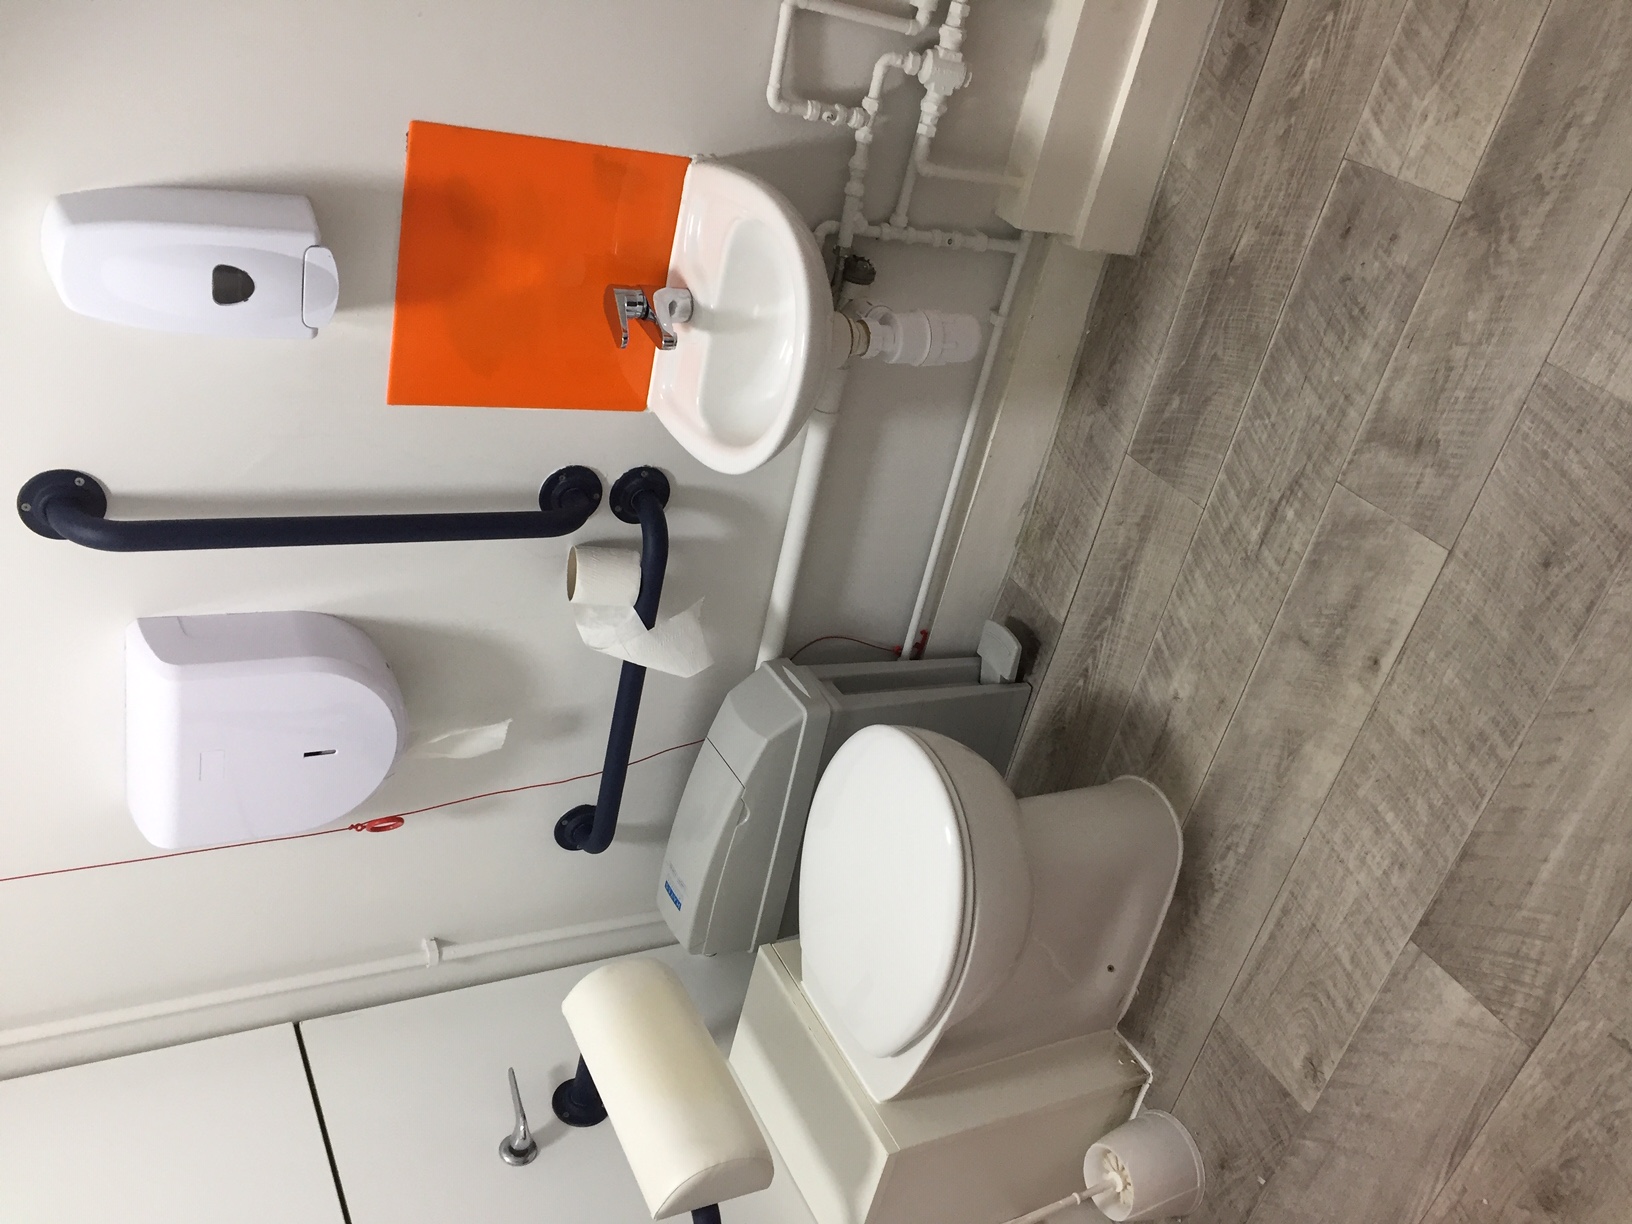 Toilet refurbished by Maintenance Team 2020